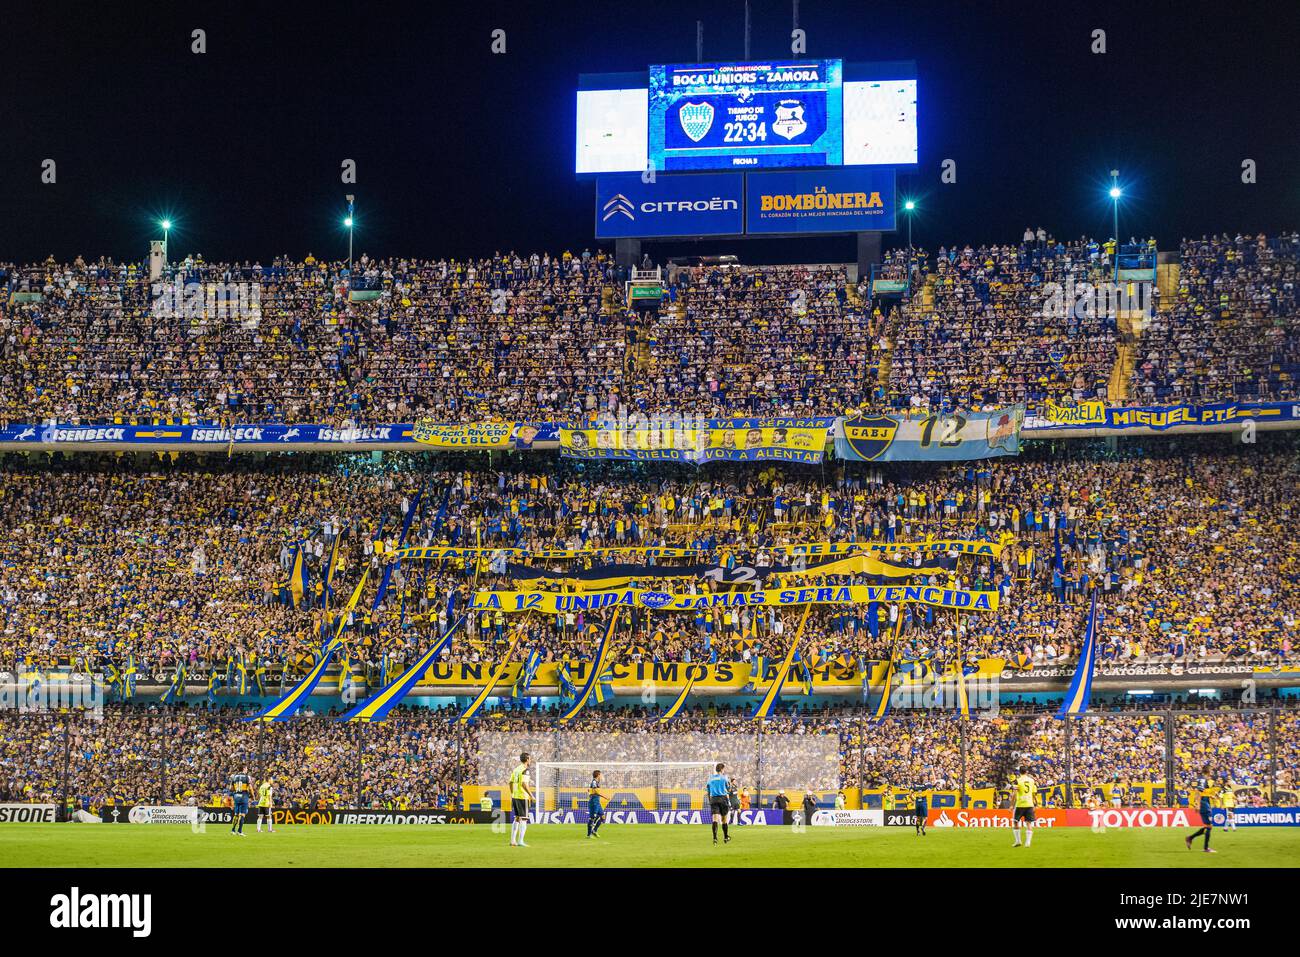 A full capacity stadium at Boca juniors home, La Bombonera. Stock Photo